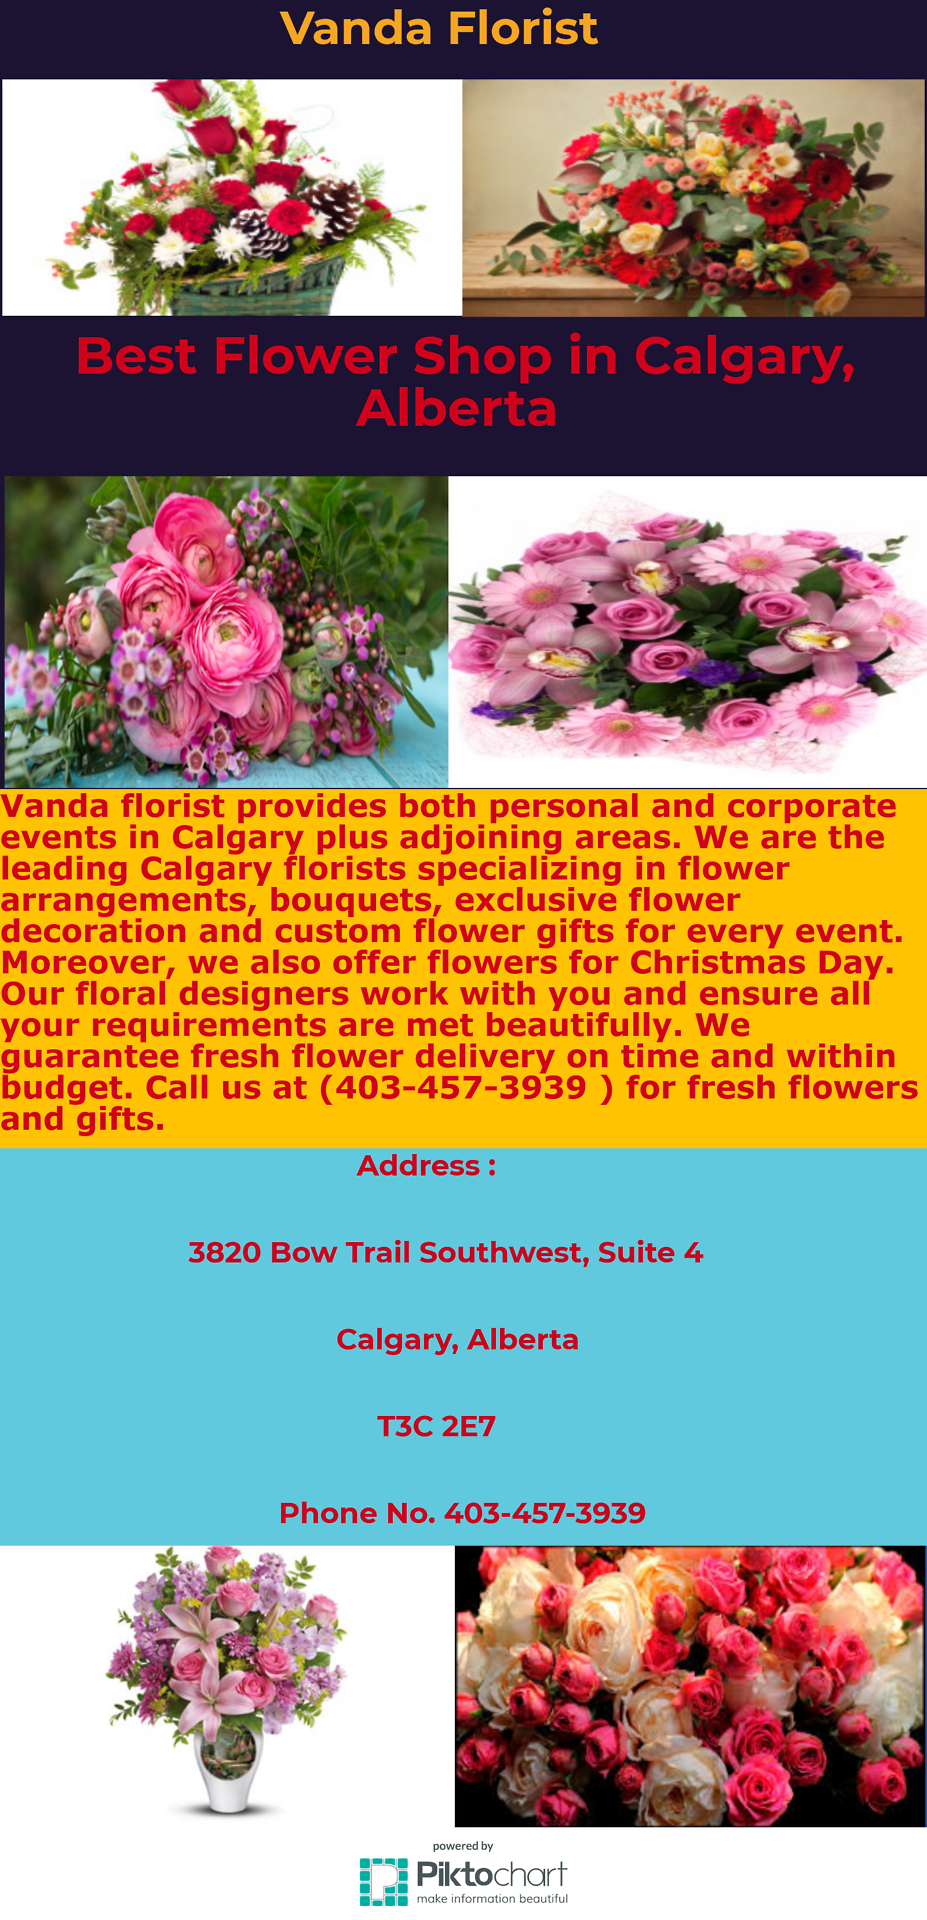 Vanda Florist Local Calgary Flower Shop Best Flower Shop In Calgary Offers Fresh Same Day